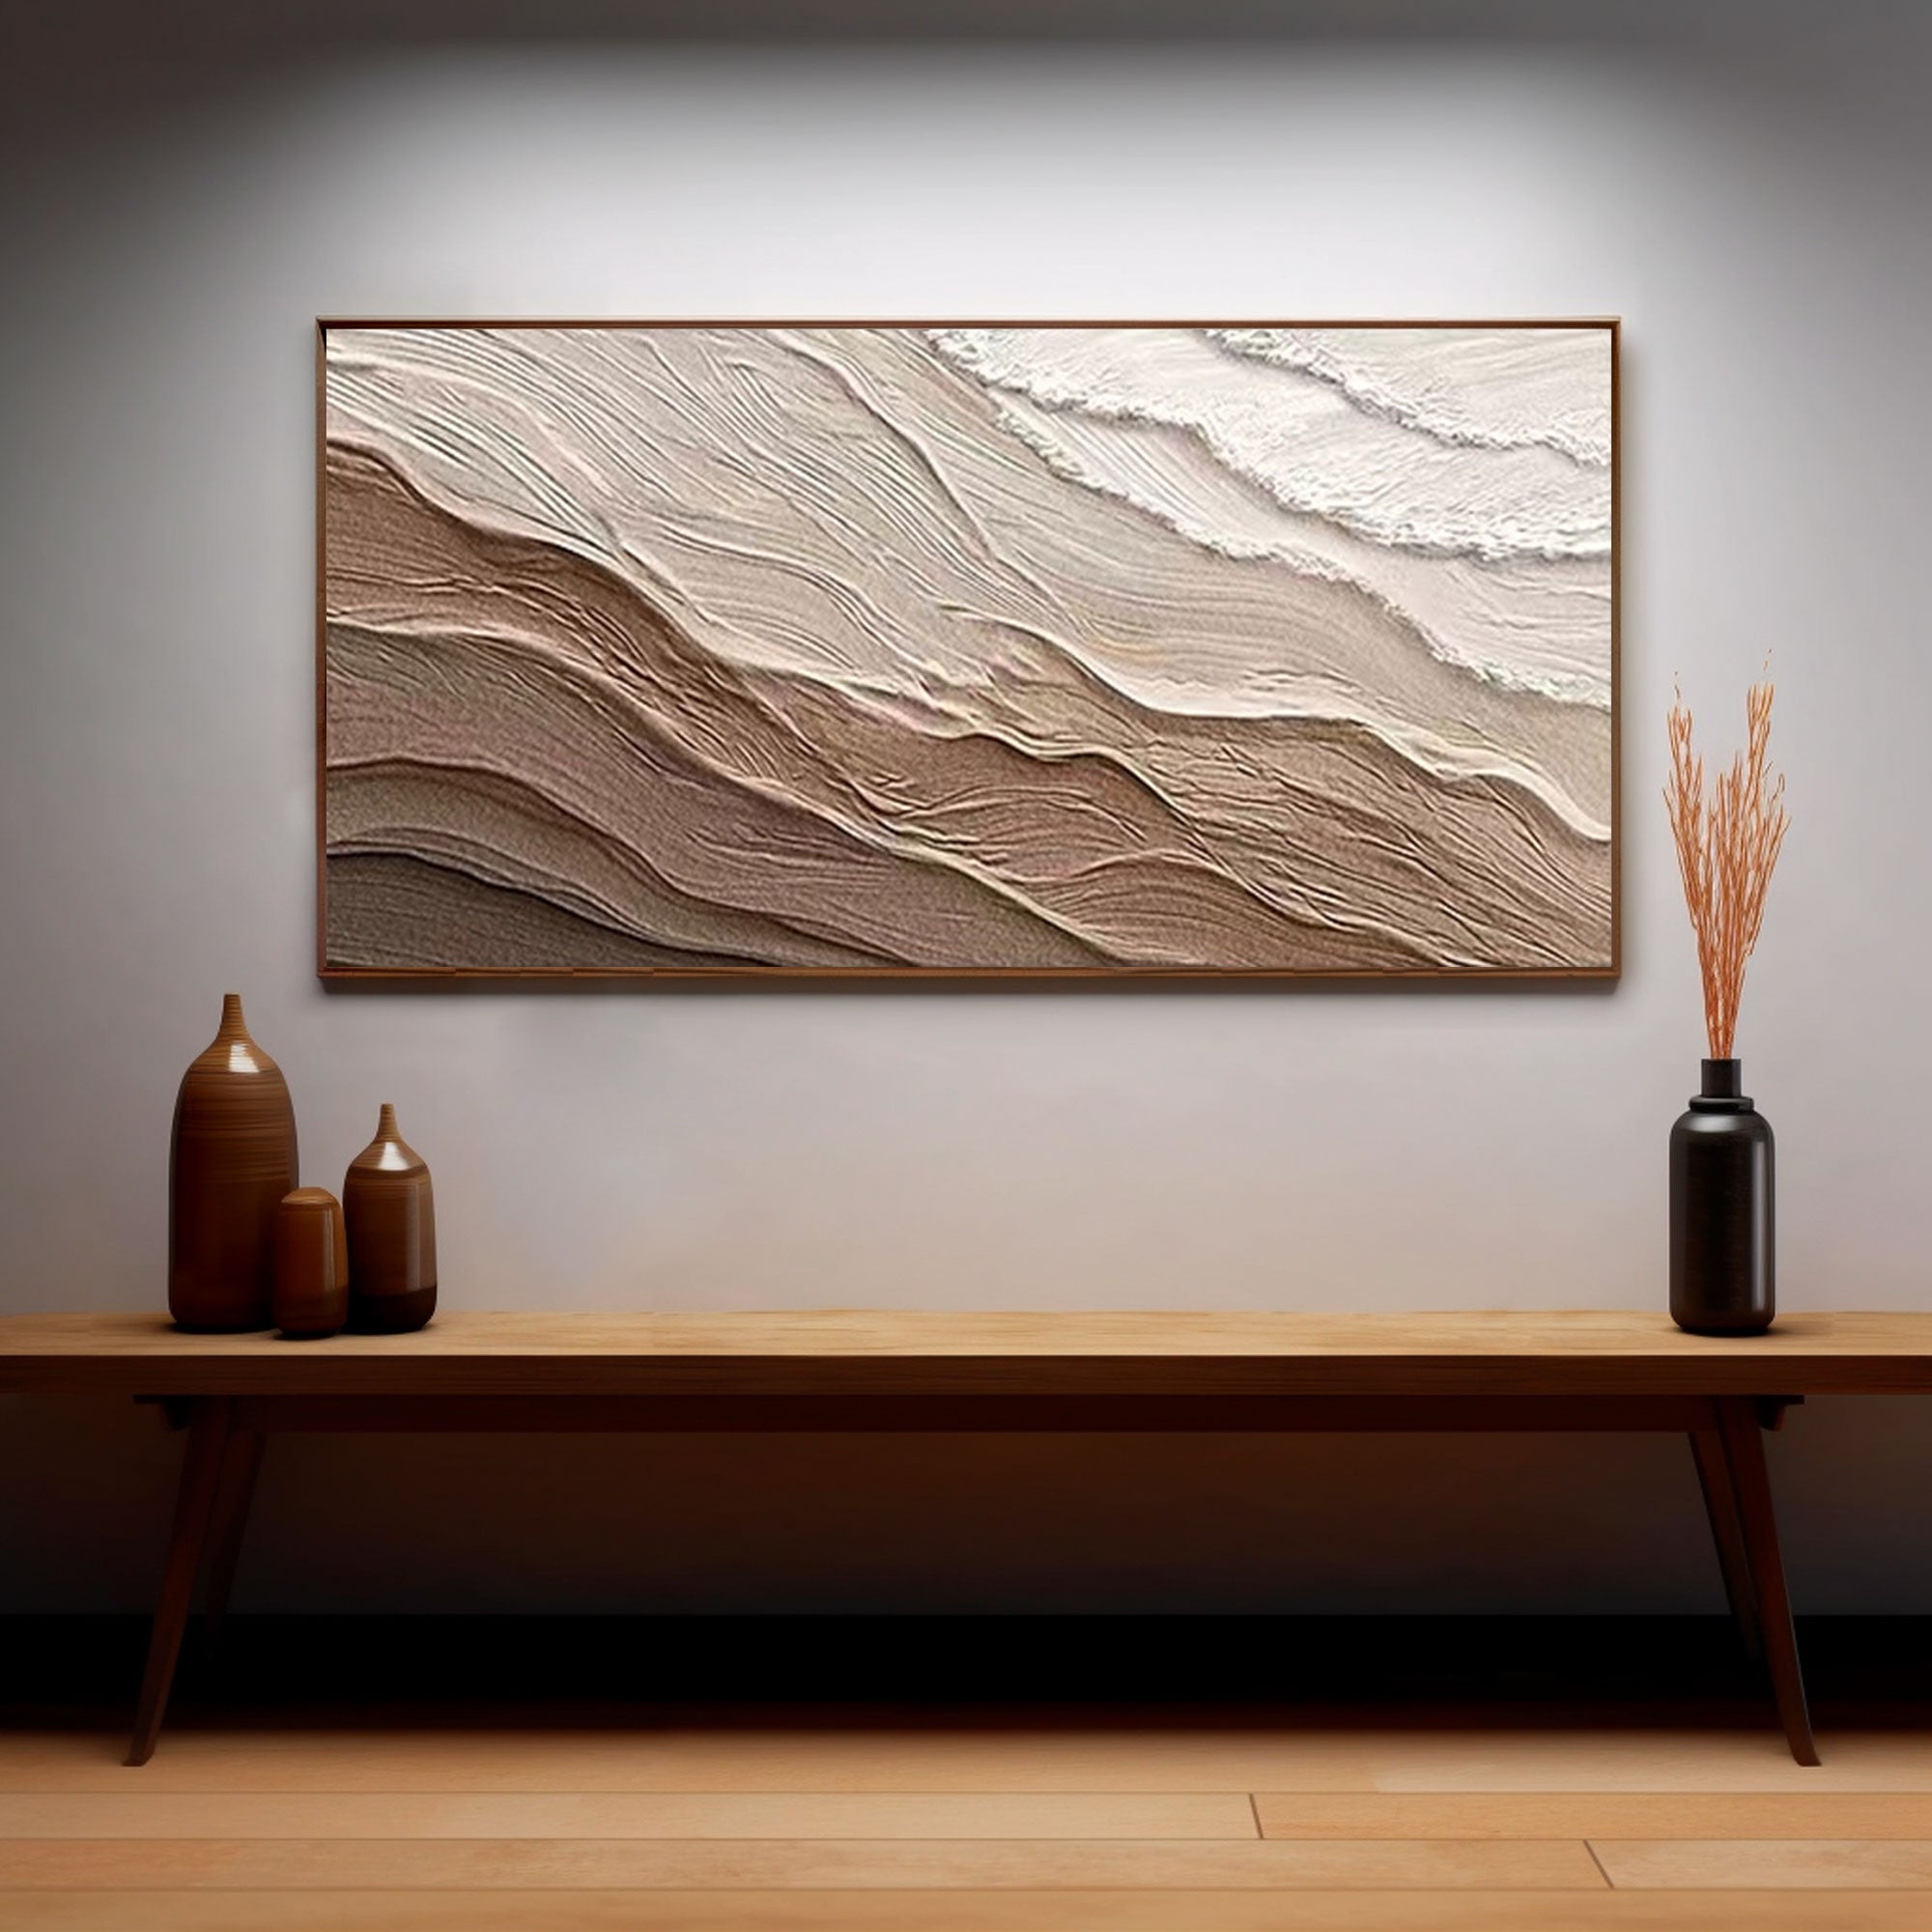 3D Textured Wall Art Abstract Painting "Desert Mirage"